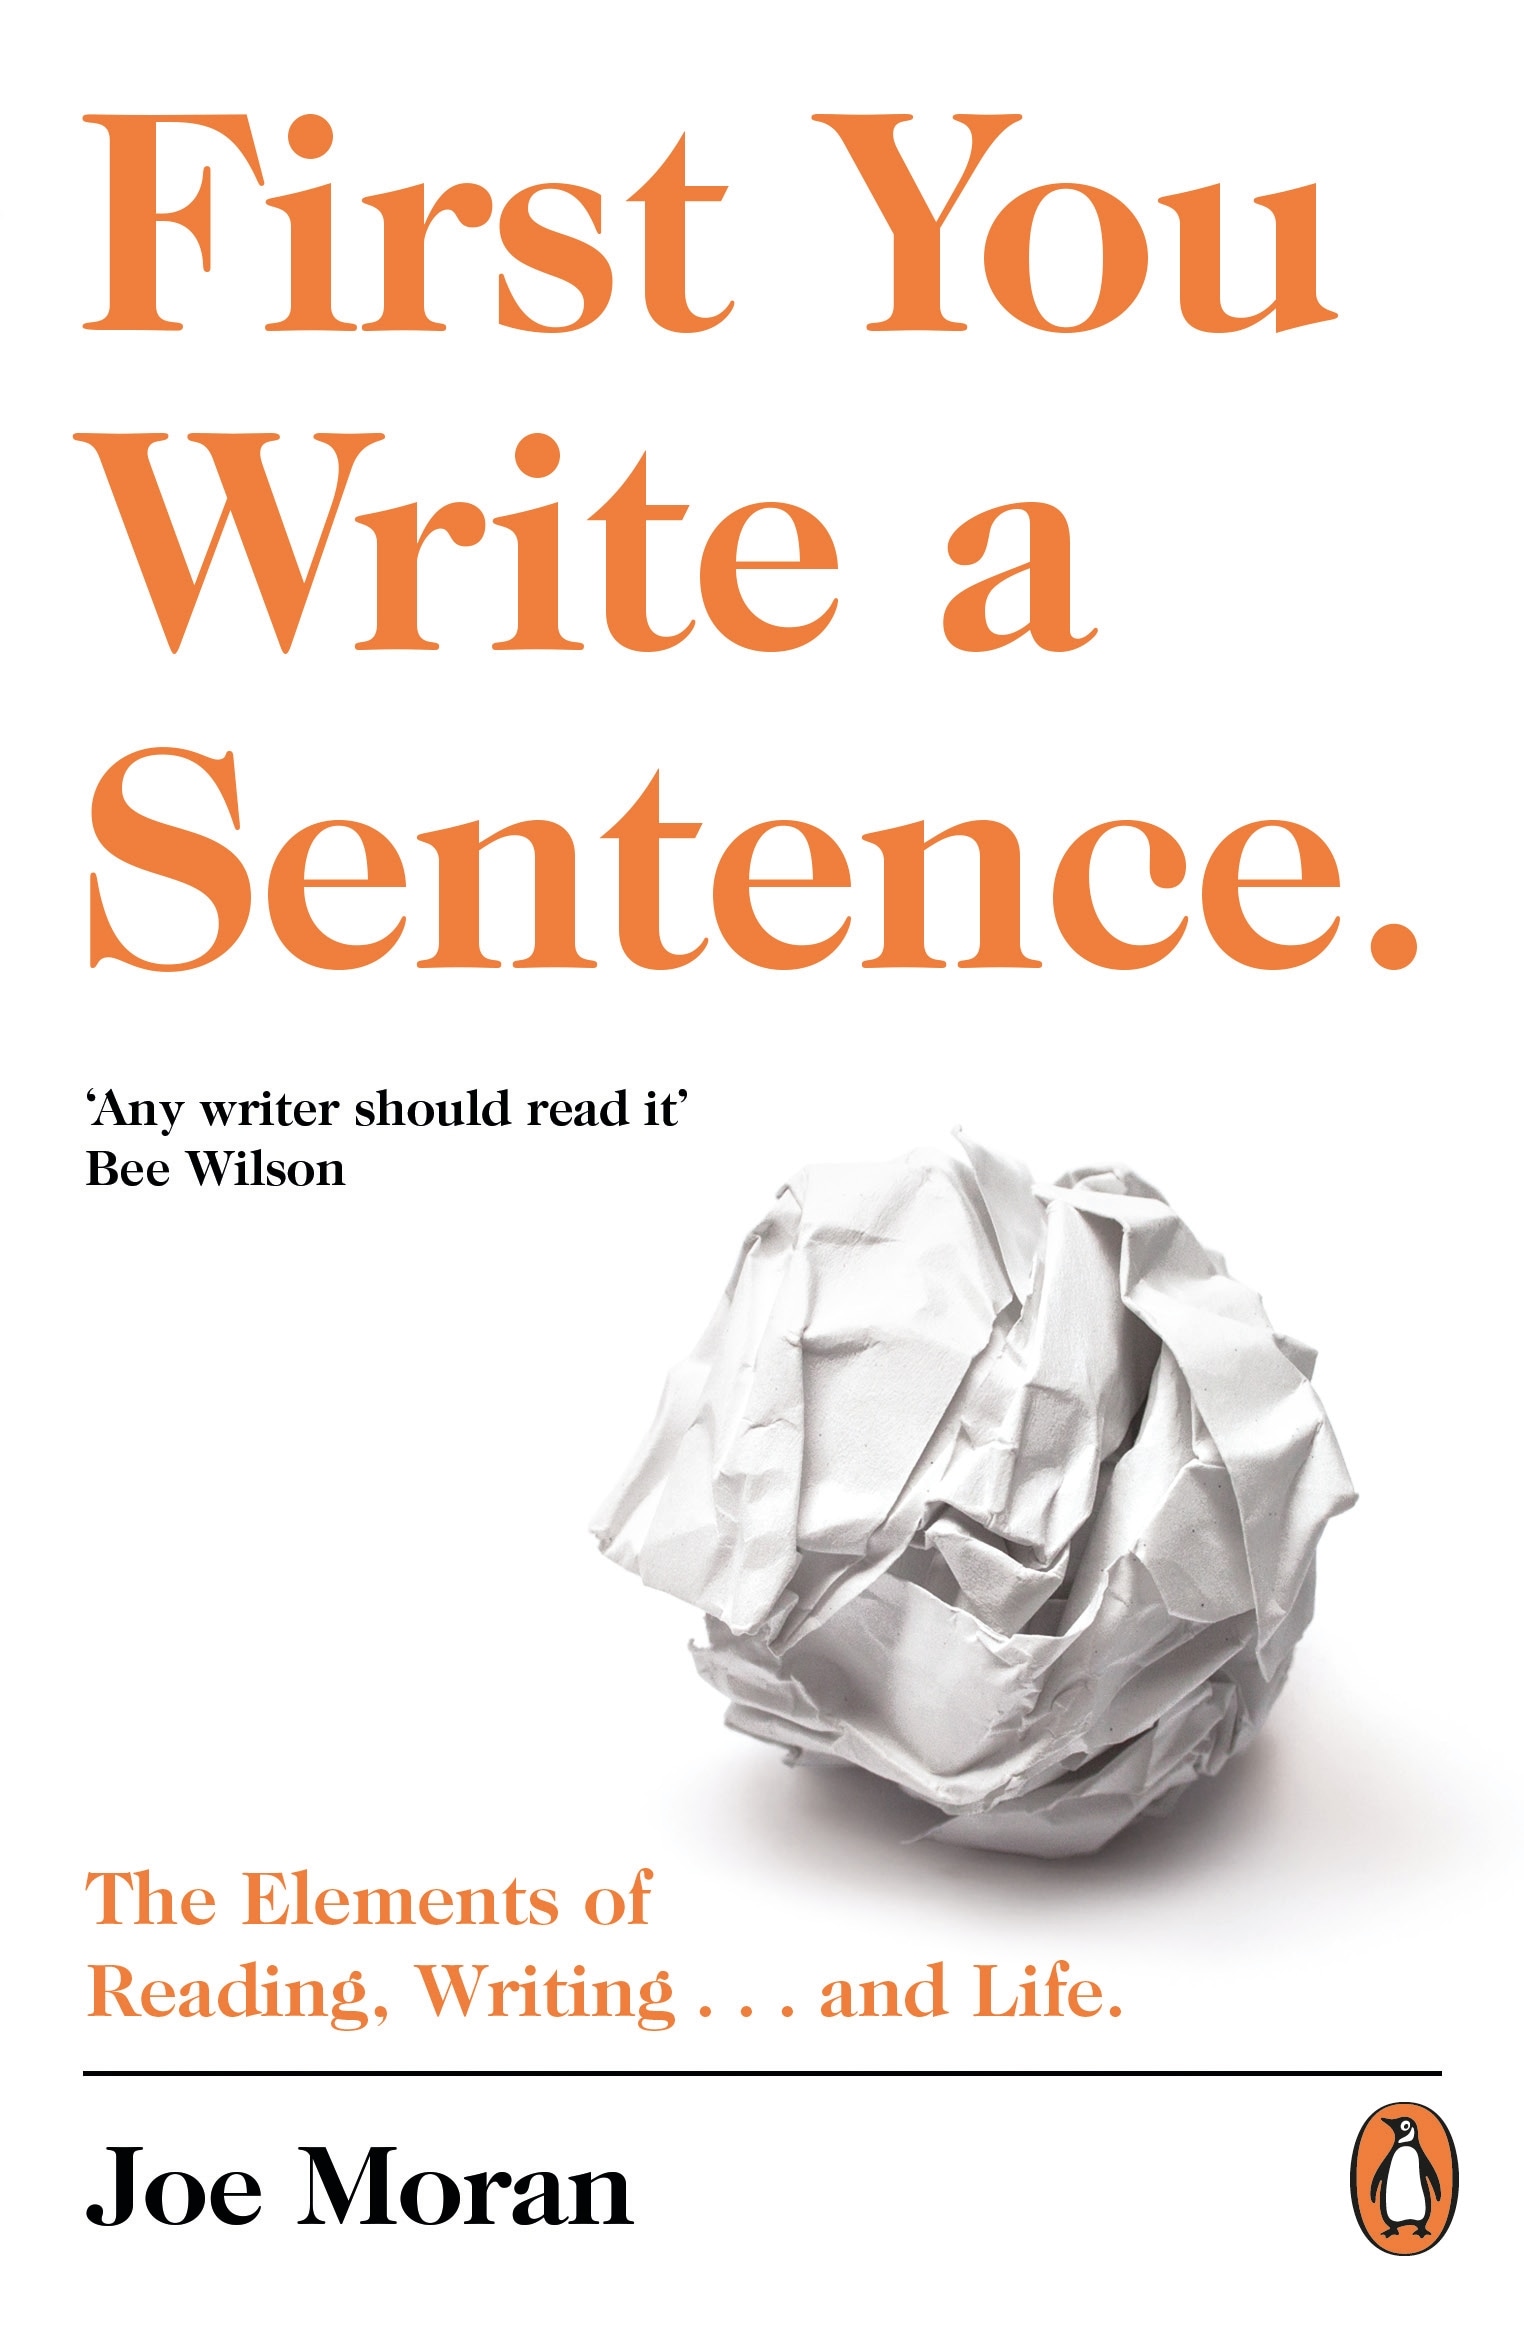 Book “First You Write a Sentence.” by Joe Moran — November 14, 2019